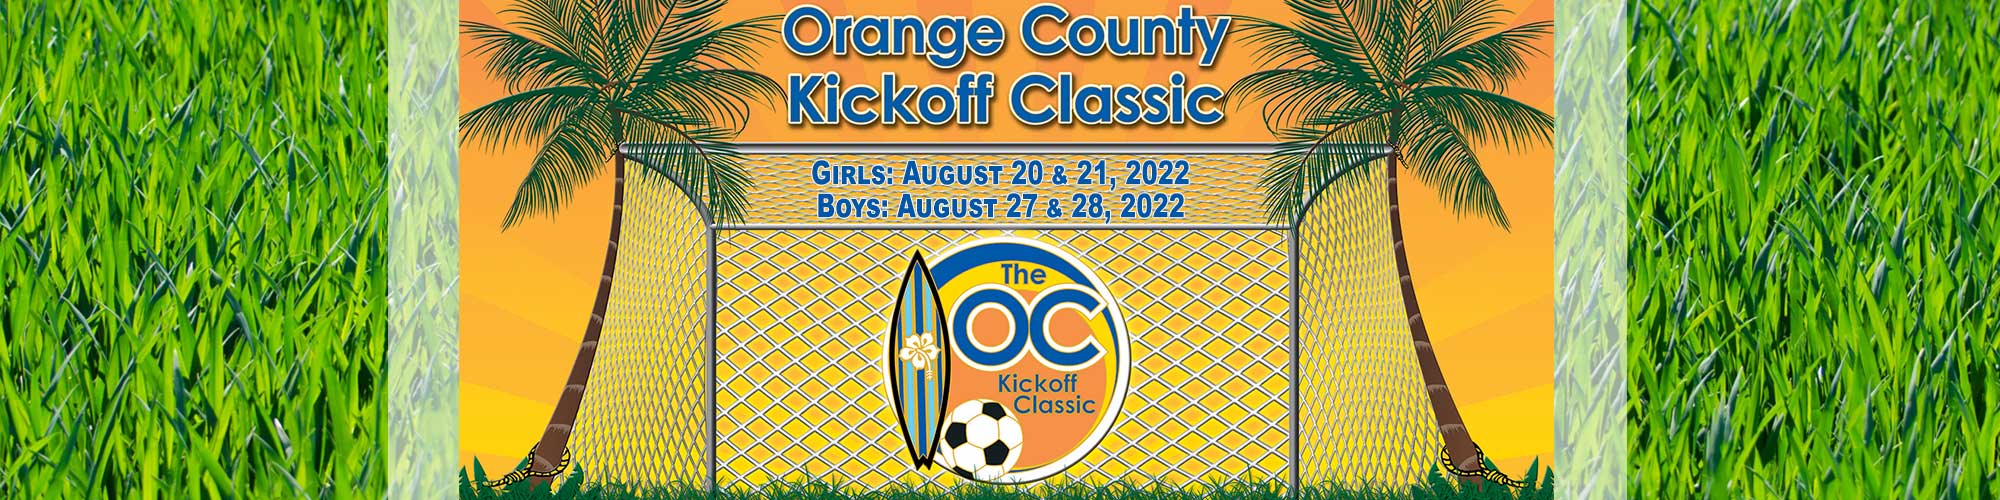 Orange County Kickoff Classic, Irvine, California, soccer tournament